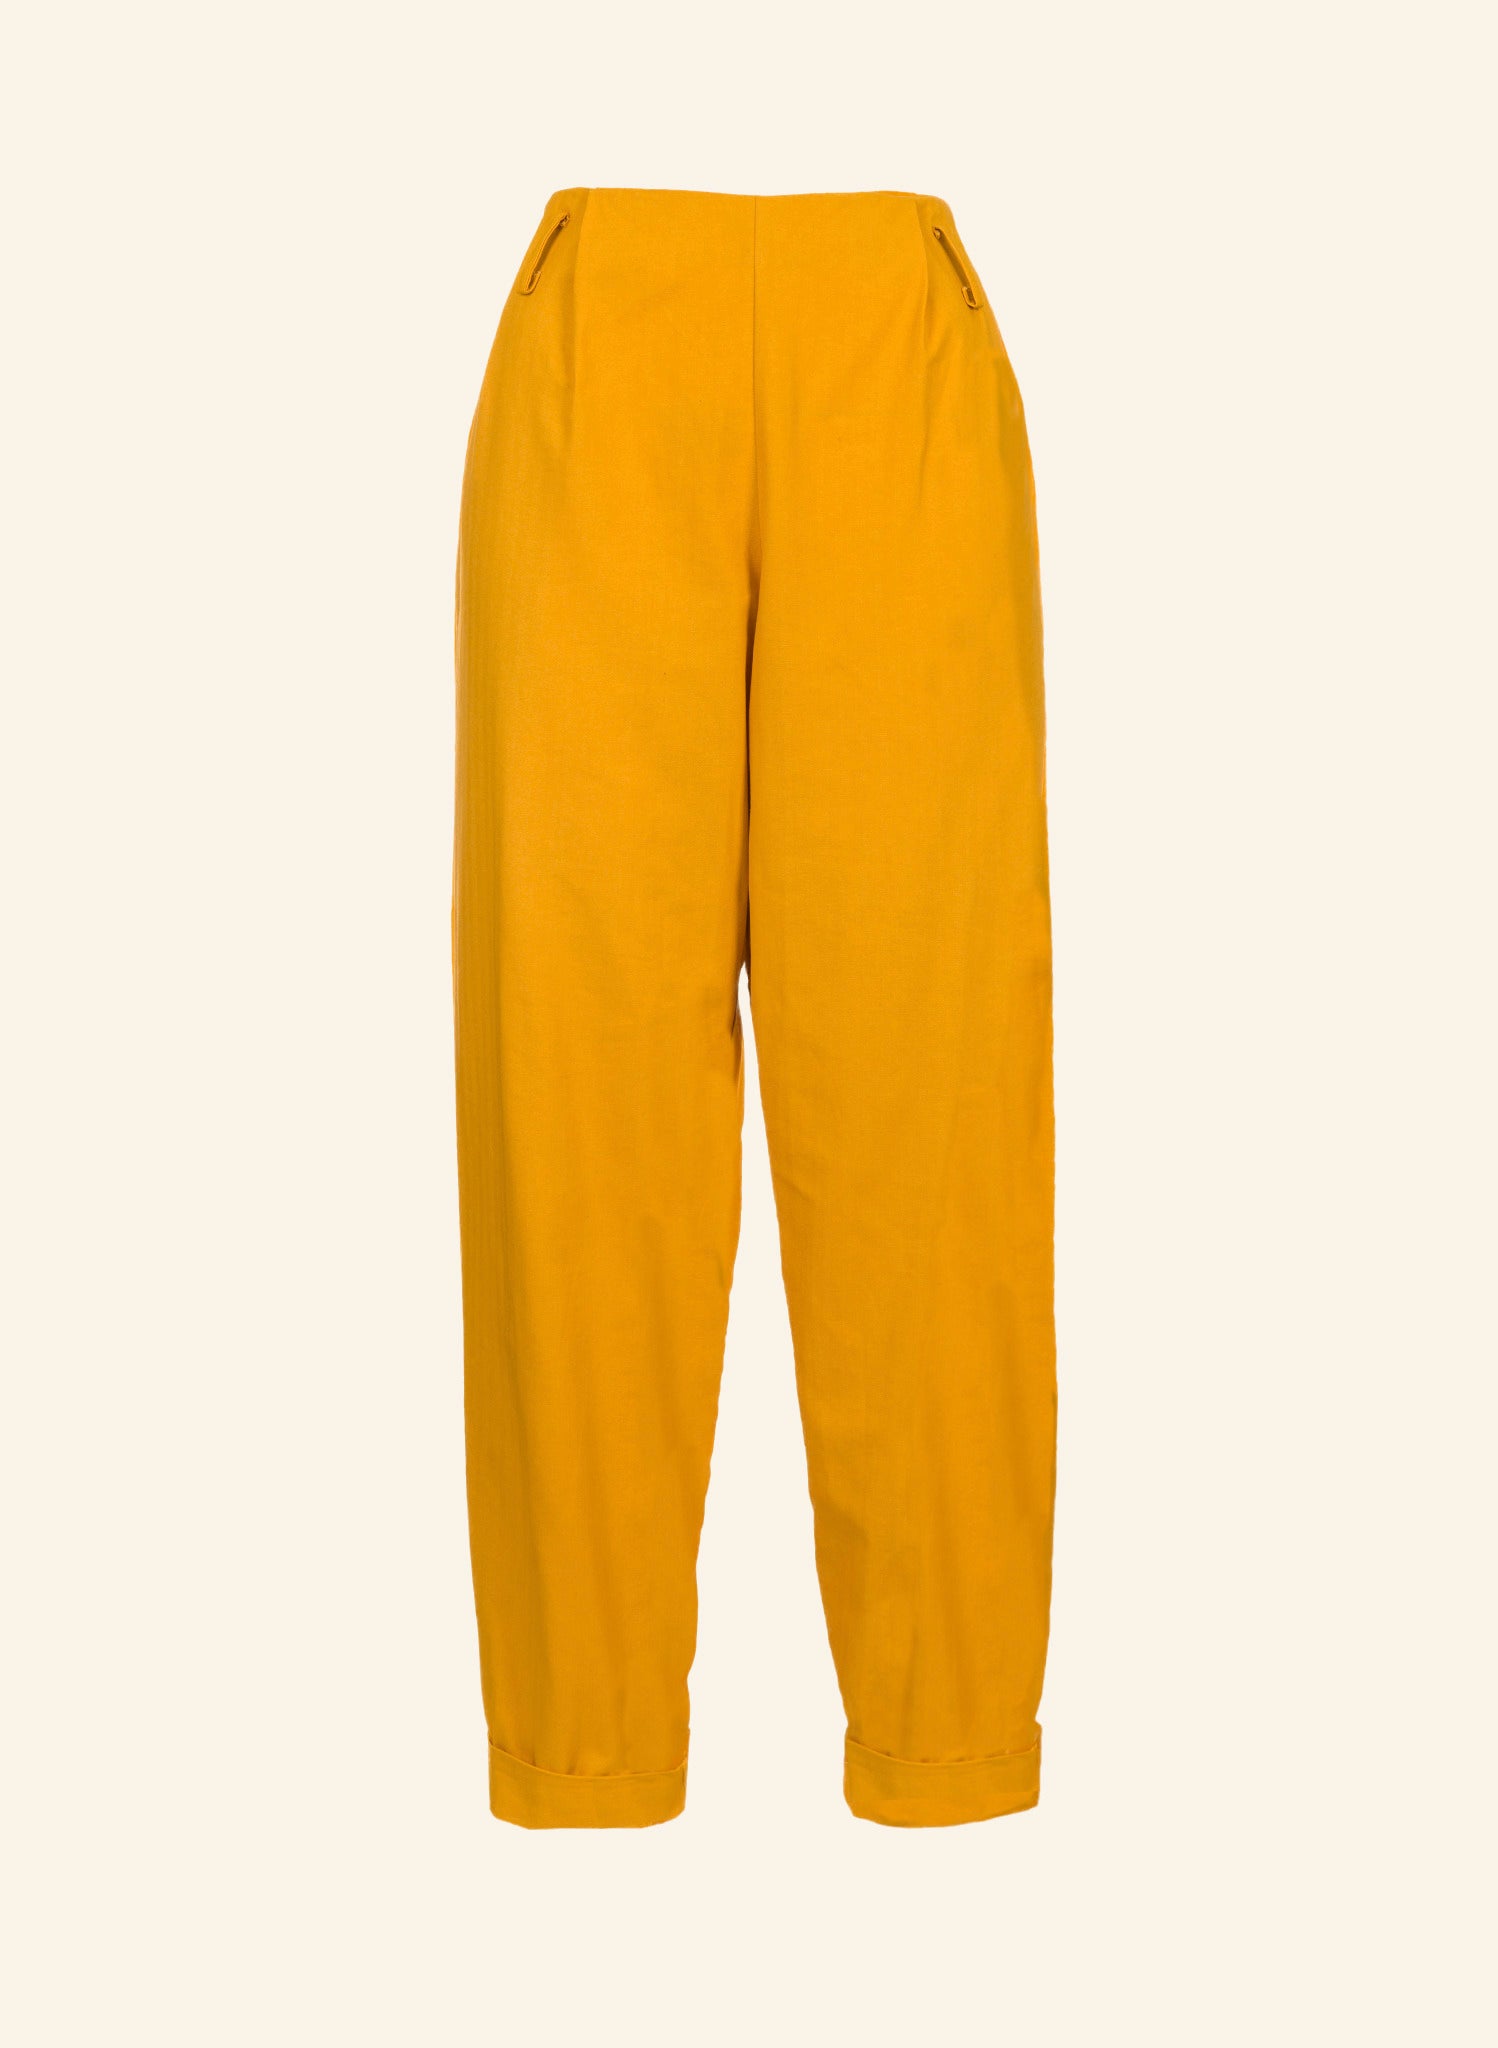 Wilma - Yellow Trousers